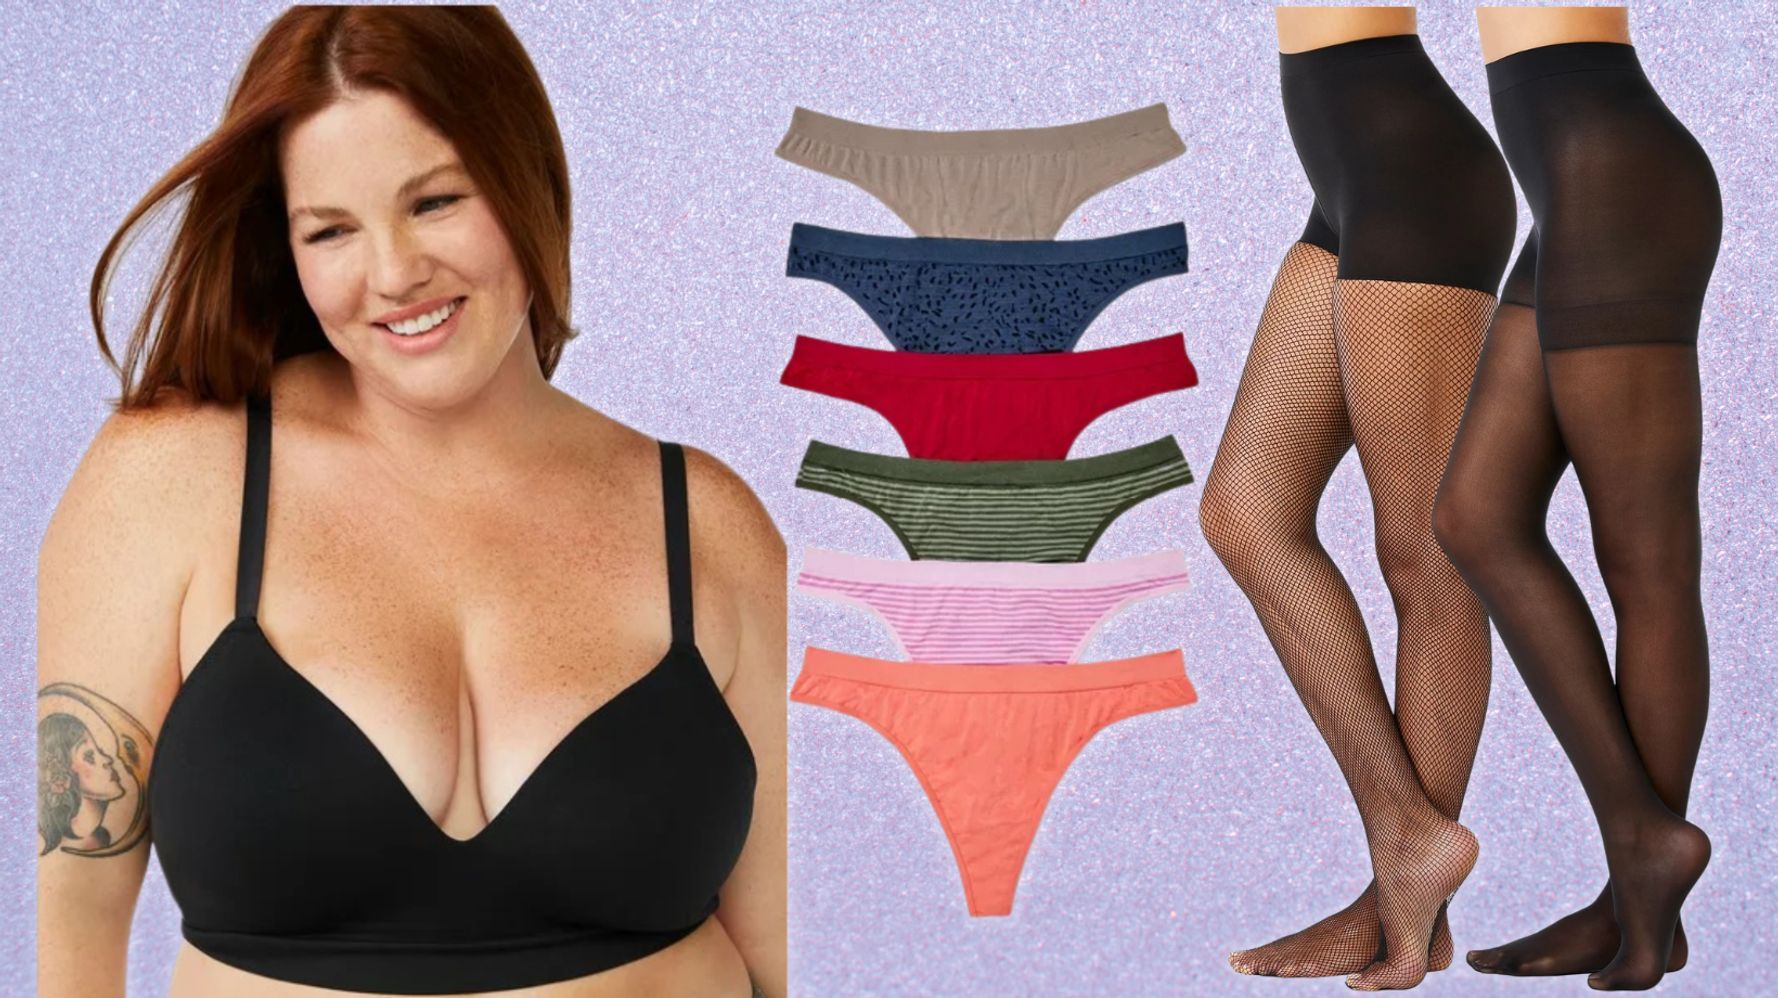 Joyspun Women's Cotton Bikini Panties, 6-Pack, Sizes S to 2XL